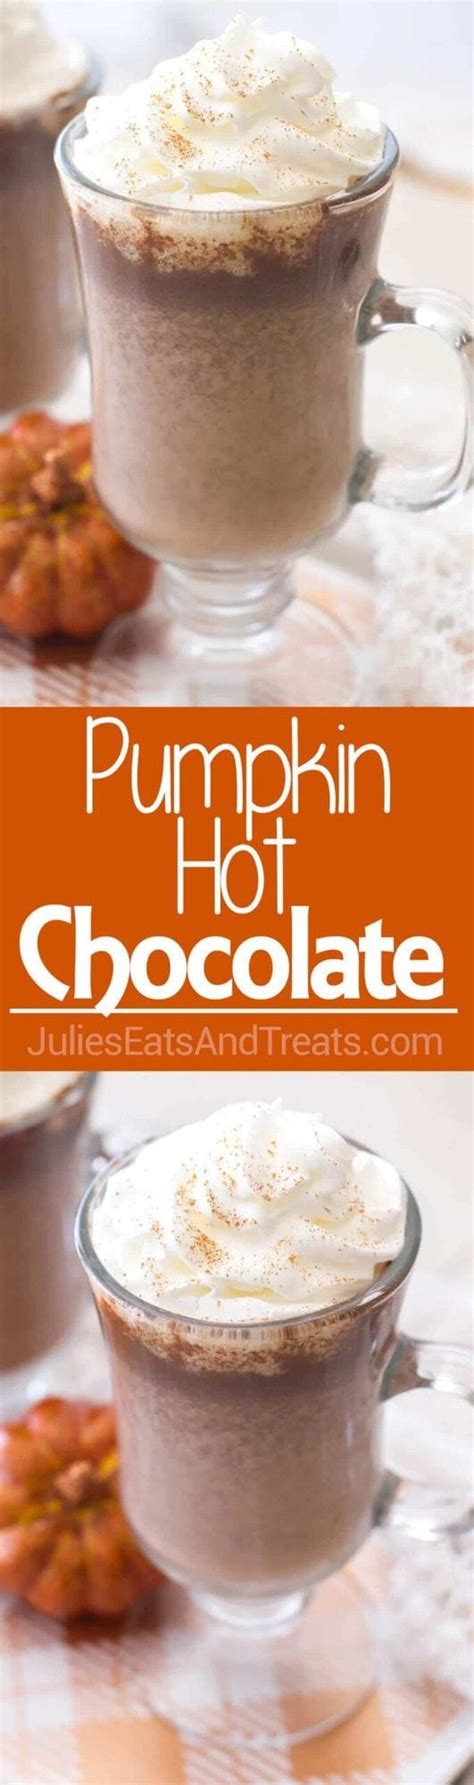 Pumpkin Hot Chocolate Julies Eats And Treats